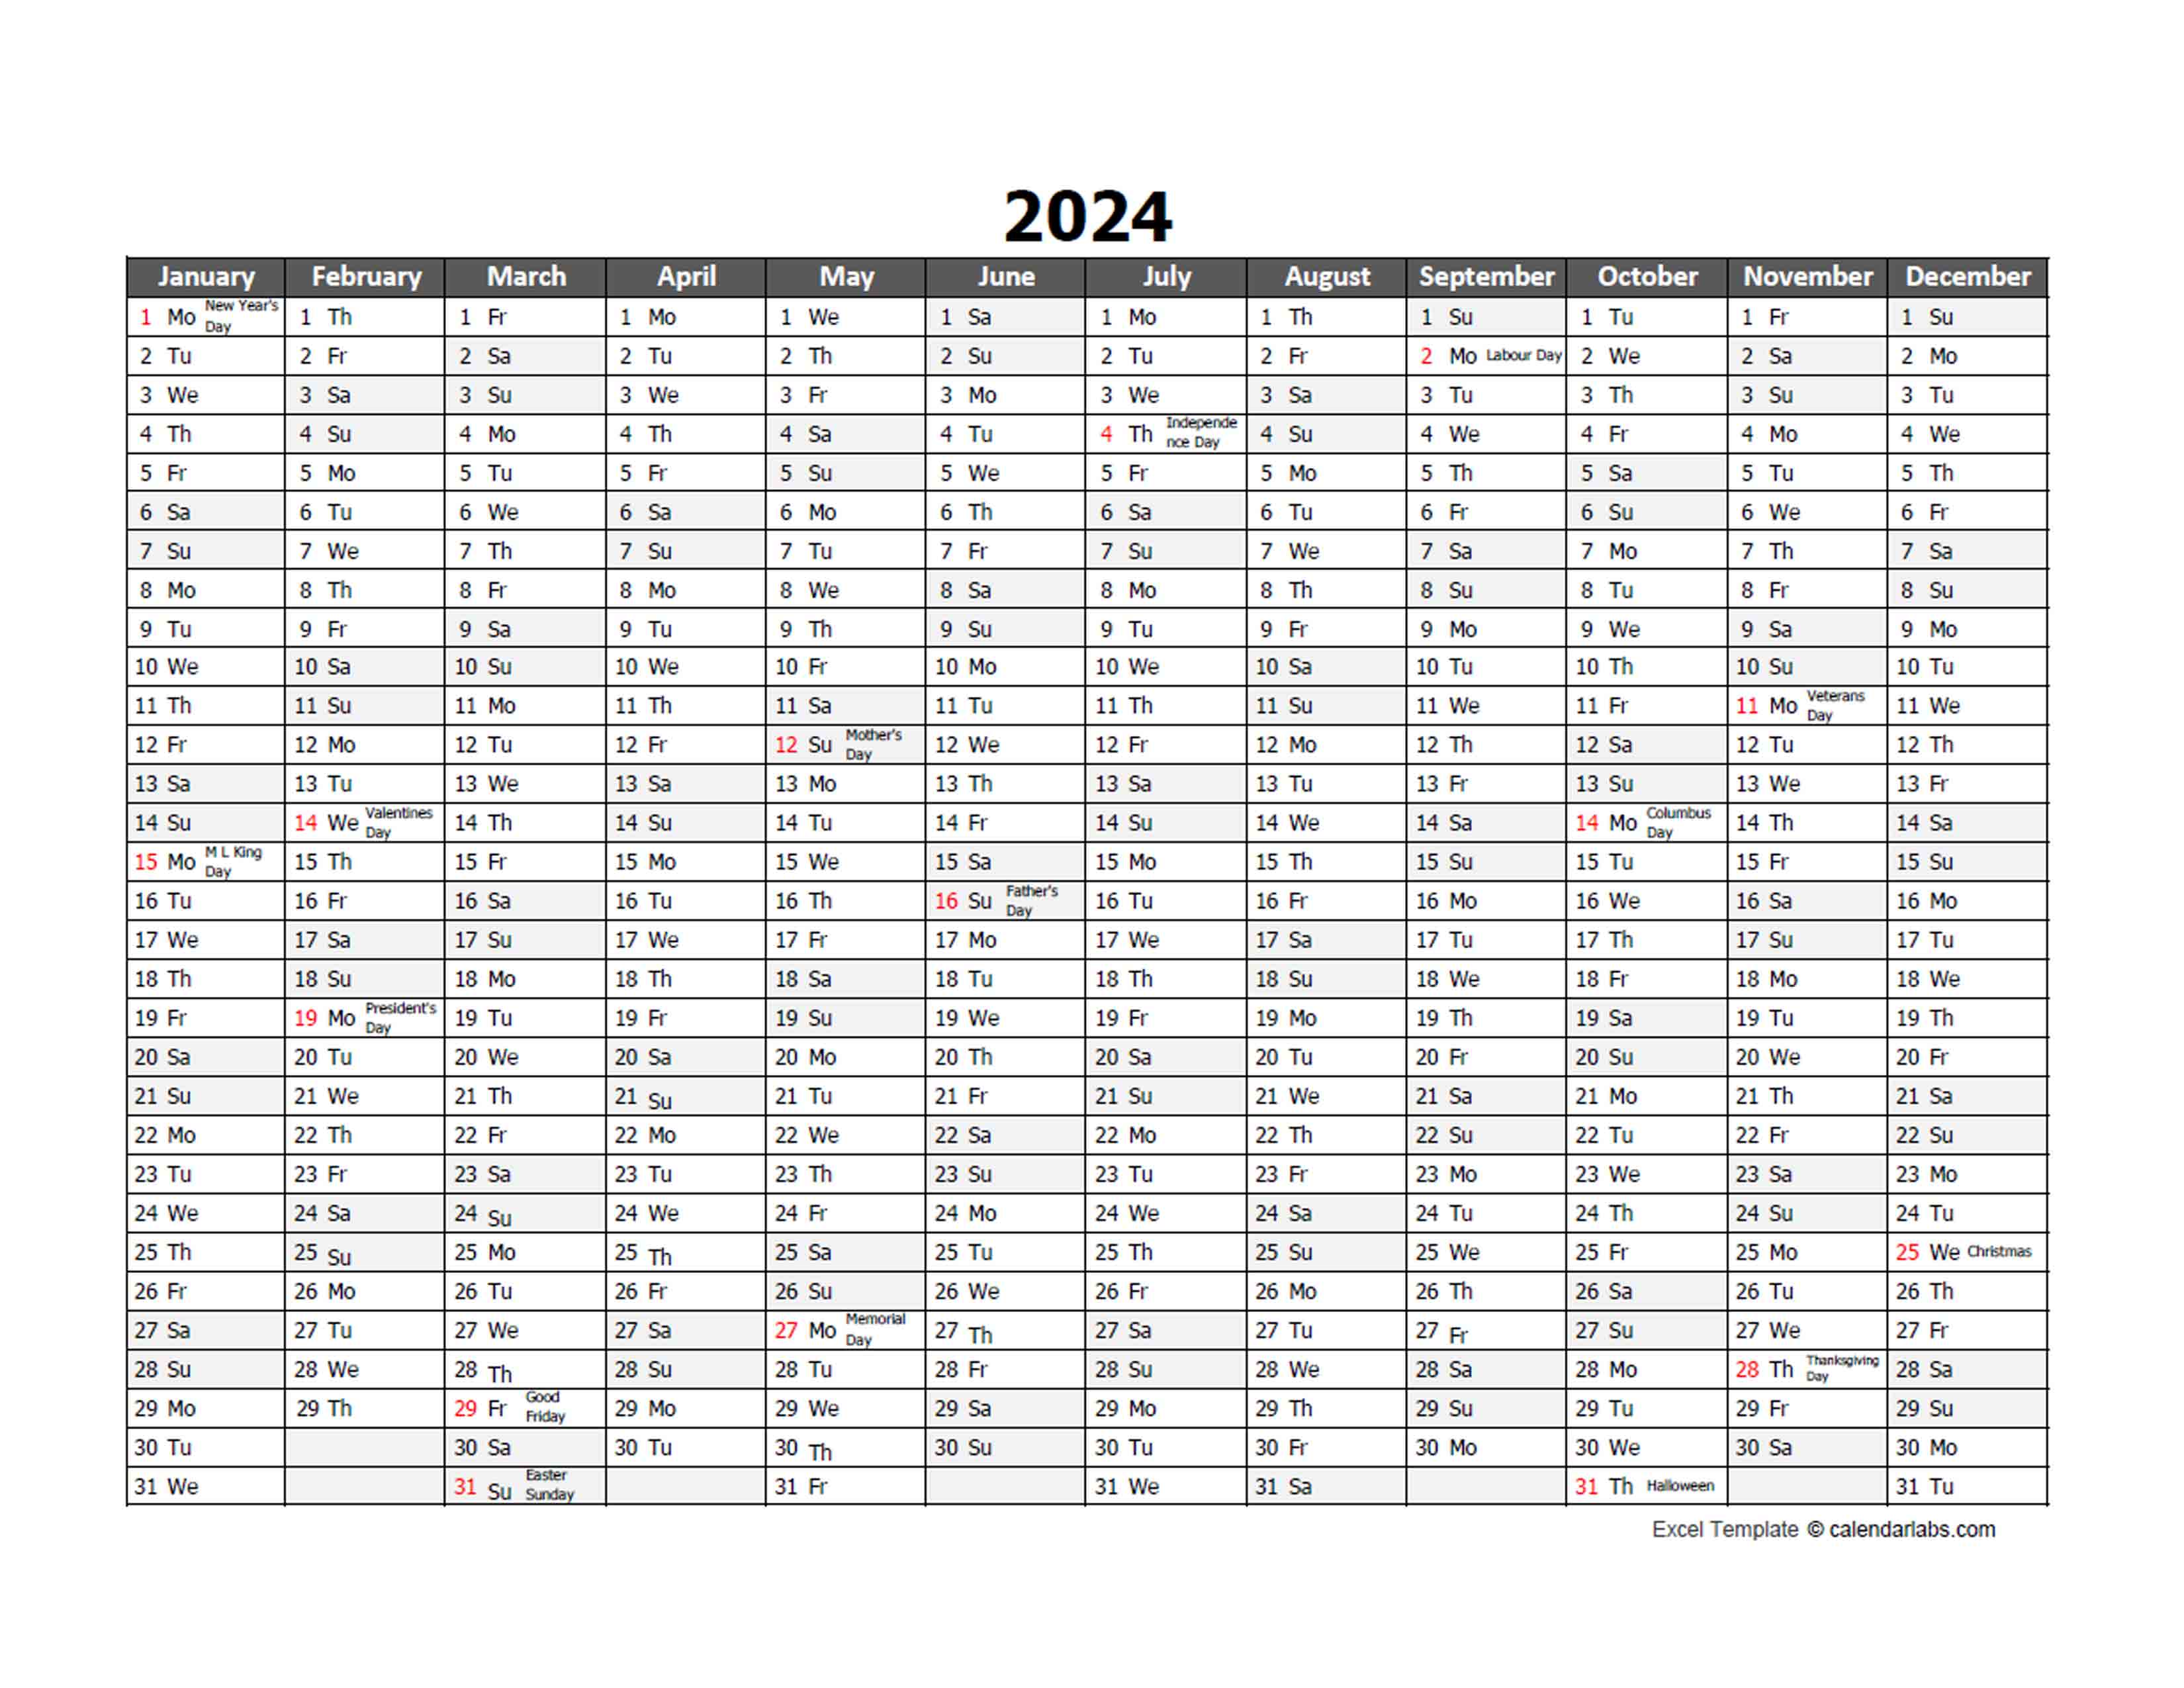 2024 Yearly Calendar Template Excel Haley Keriann